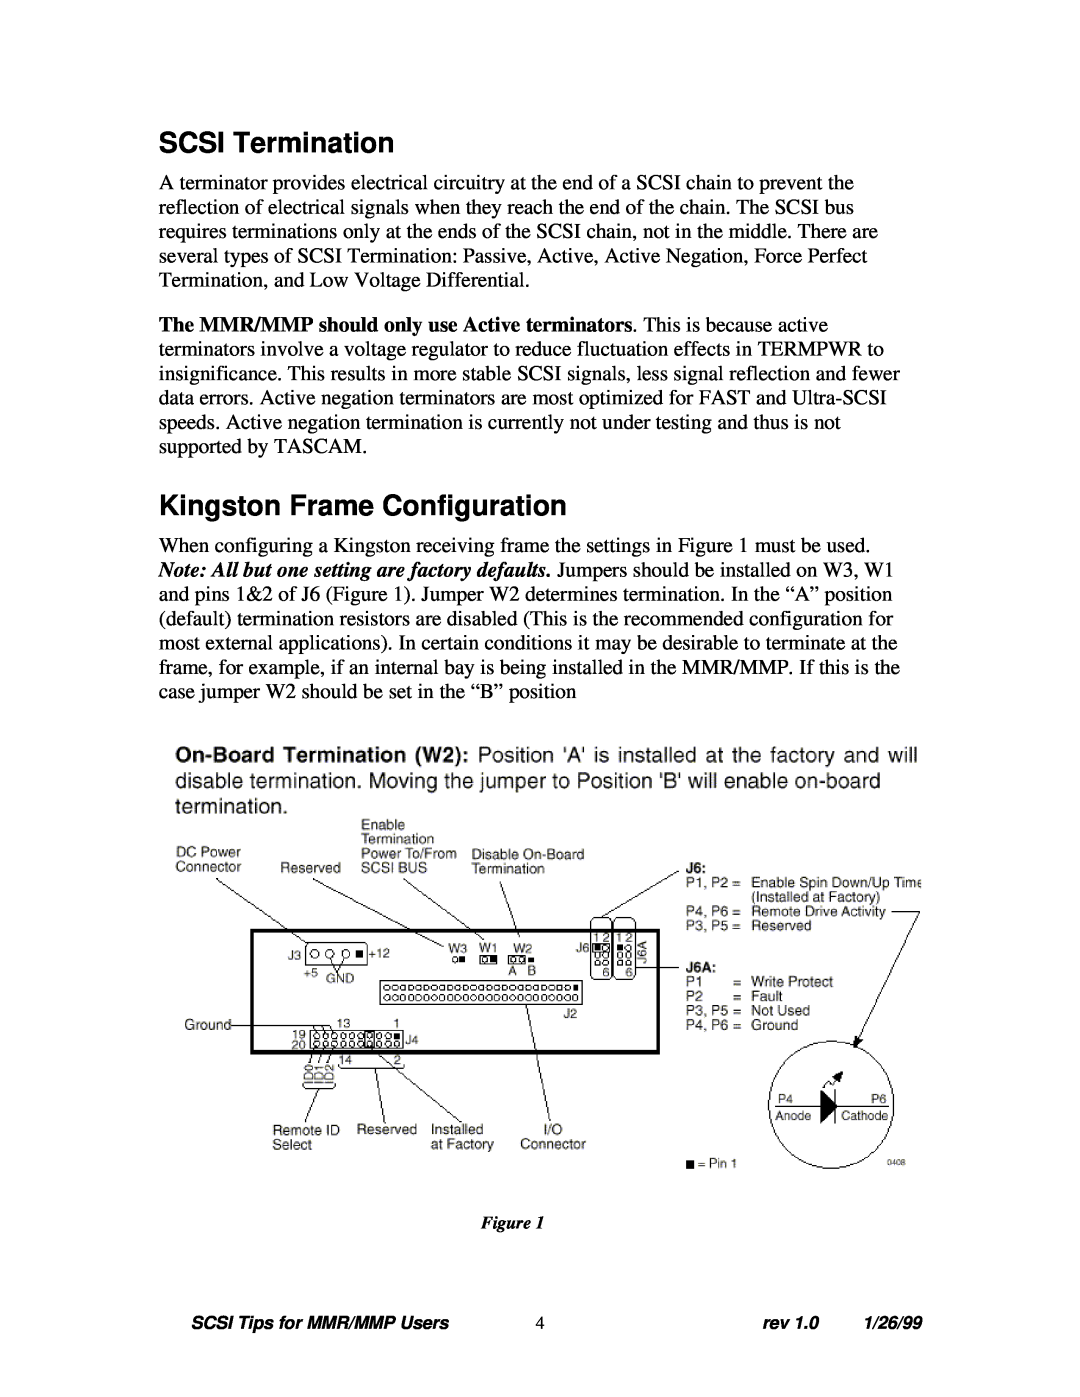 Tascam MMP-16, MMR-8 manual SCSI Termination, Kingston Frame Configuration 